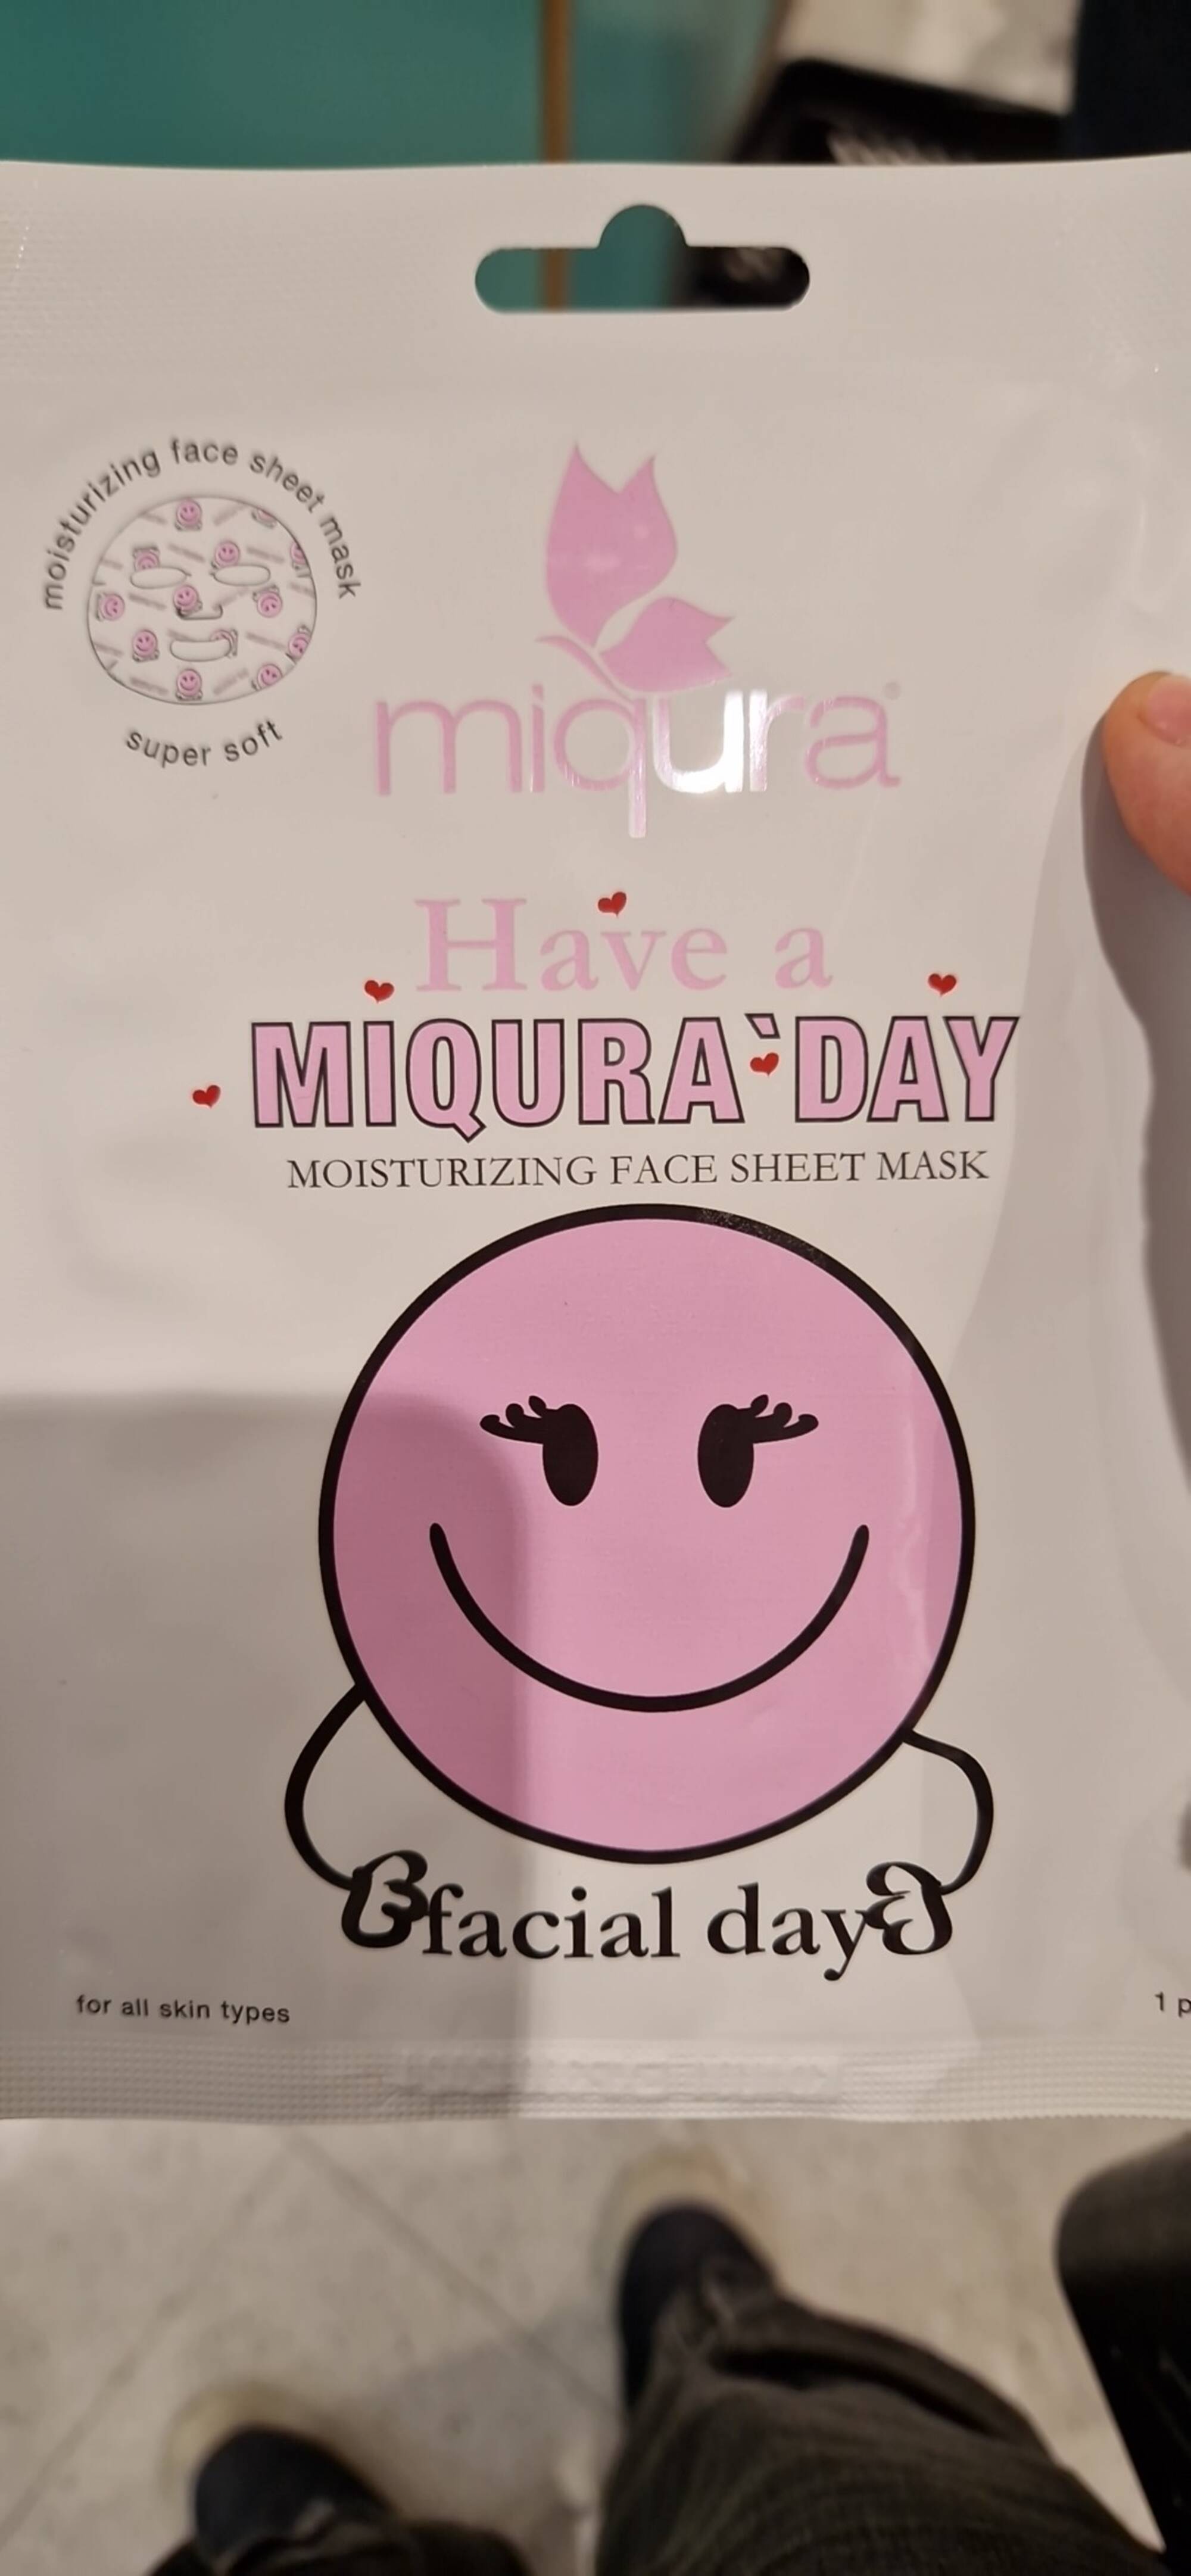 MIQURA - Have a miqura day - Moisturizing face sheet mask